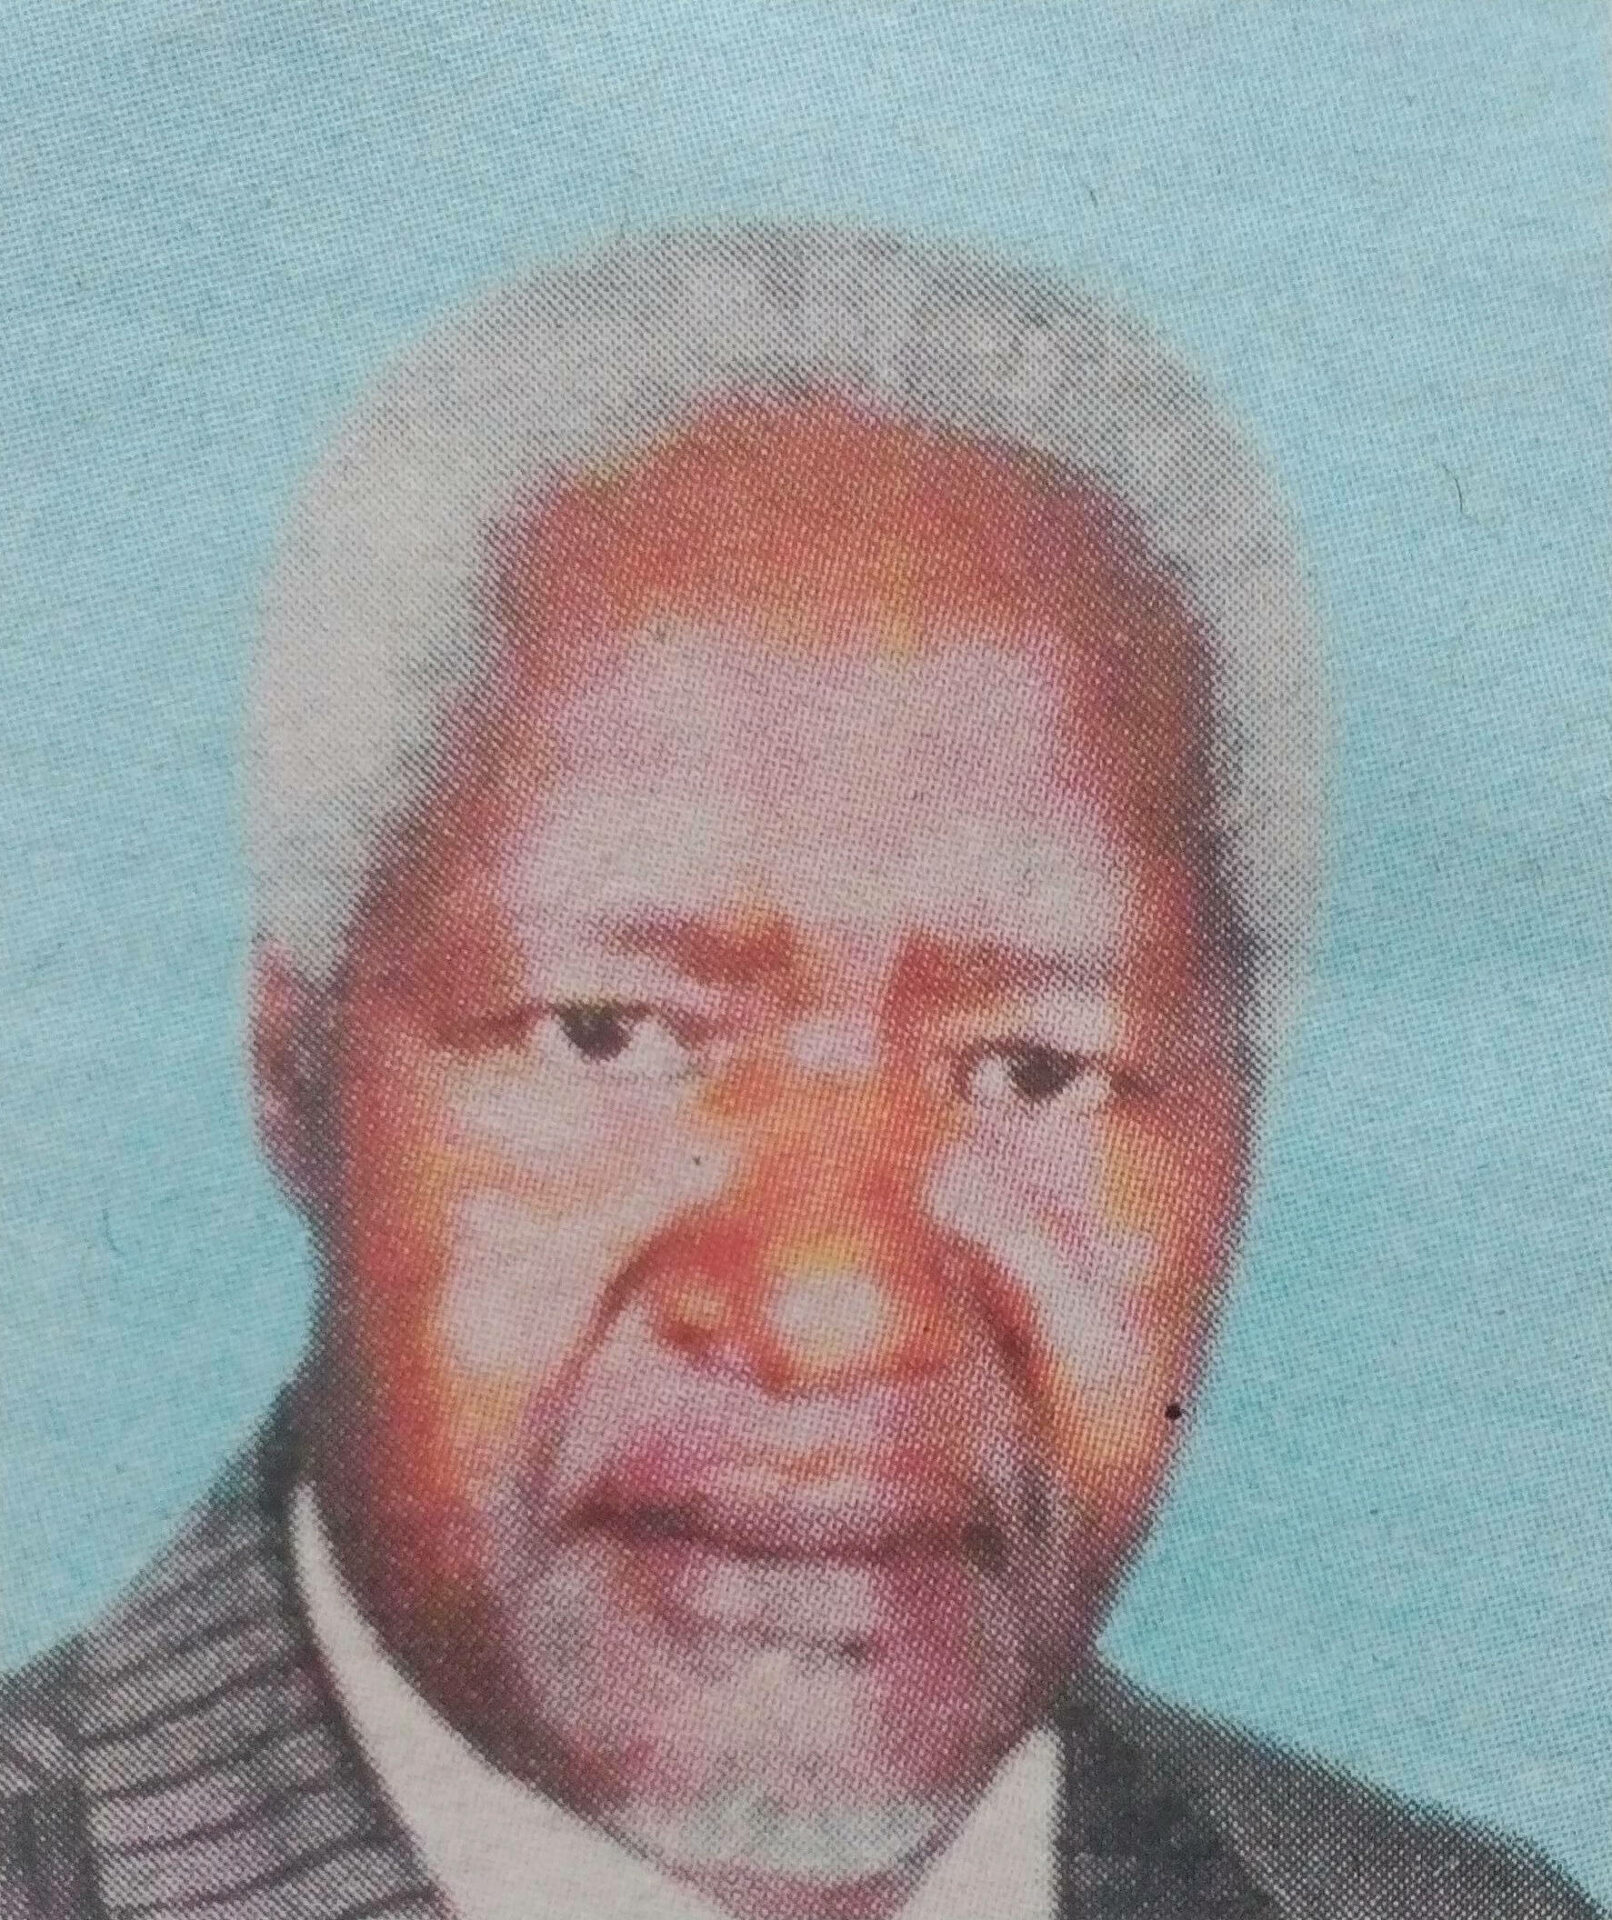 Obituary Image of Shealtiel Obondo Simeon 0Iang (SOS) 14/12/1944 - 7/4/2017